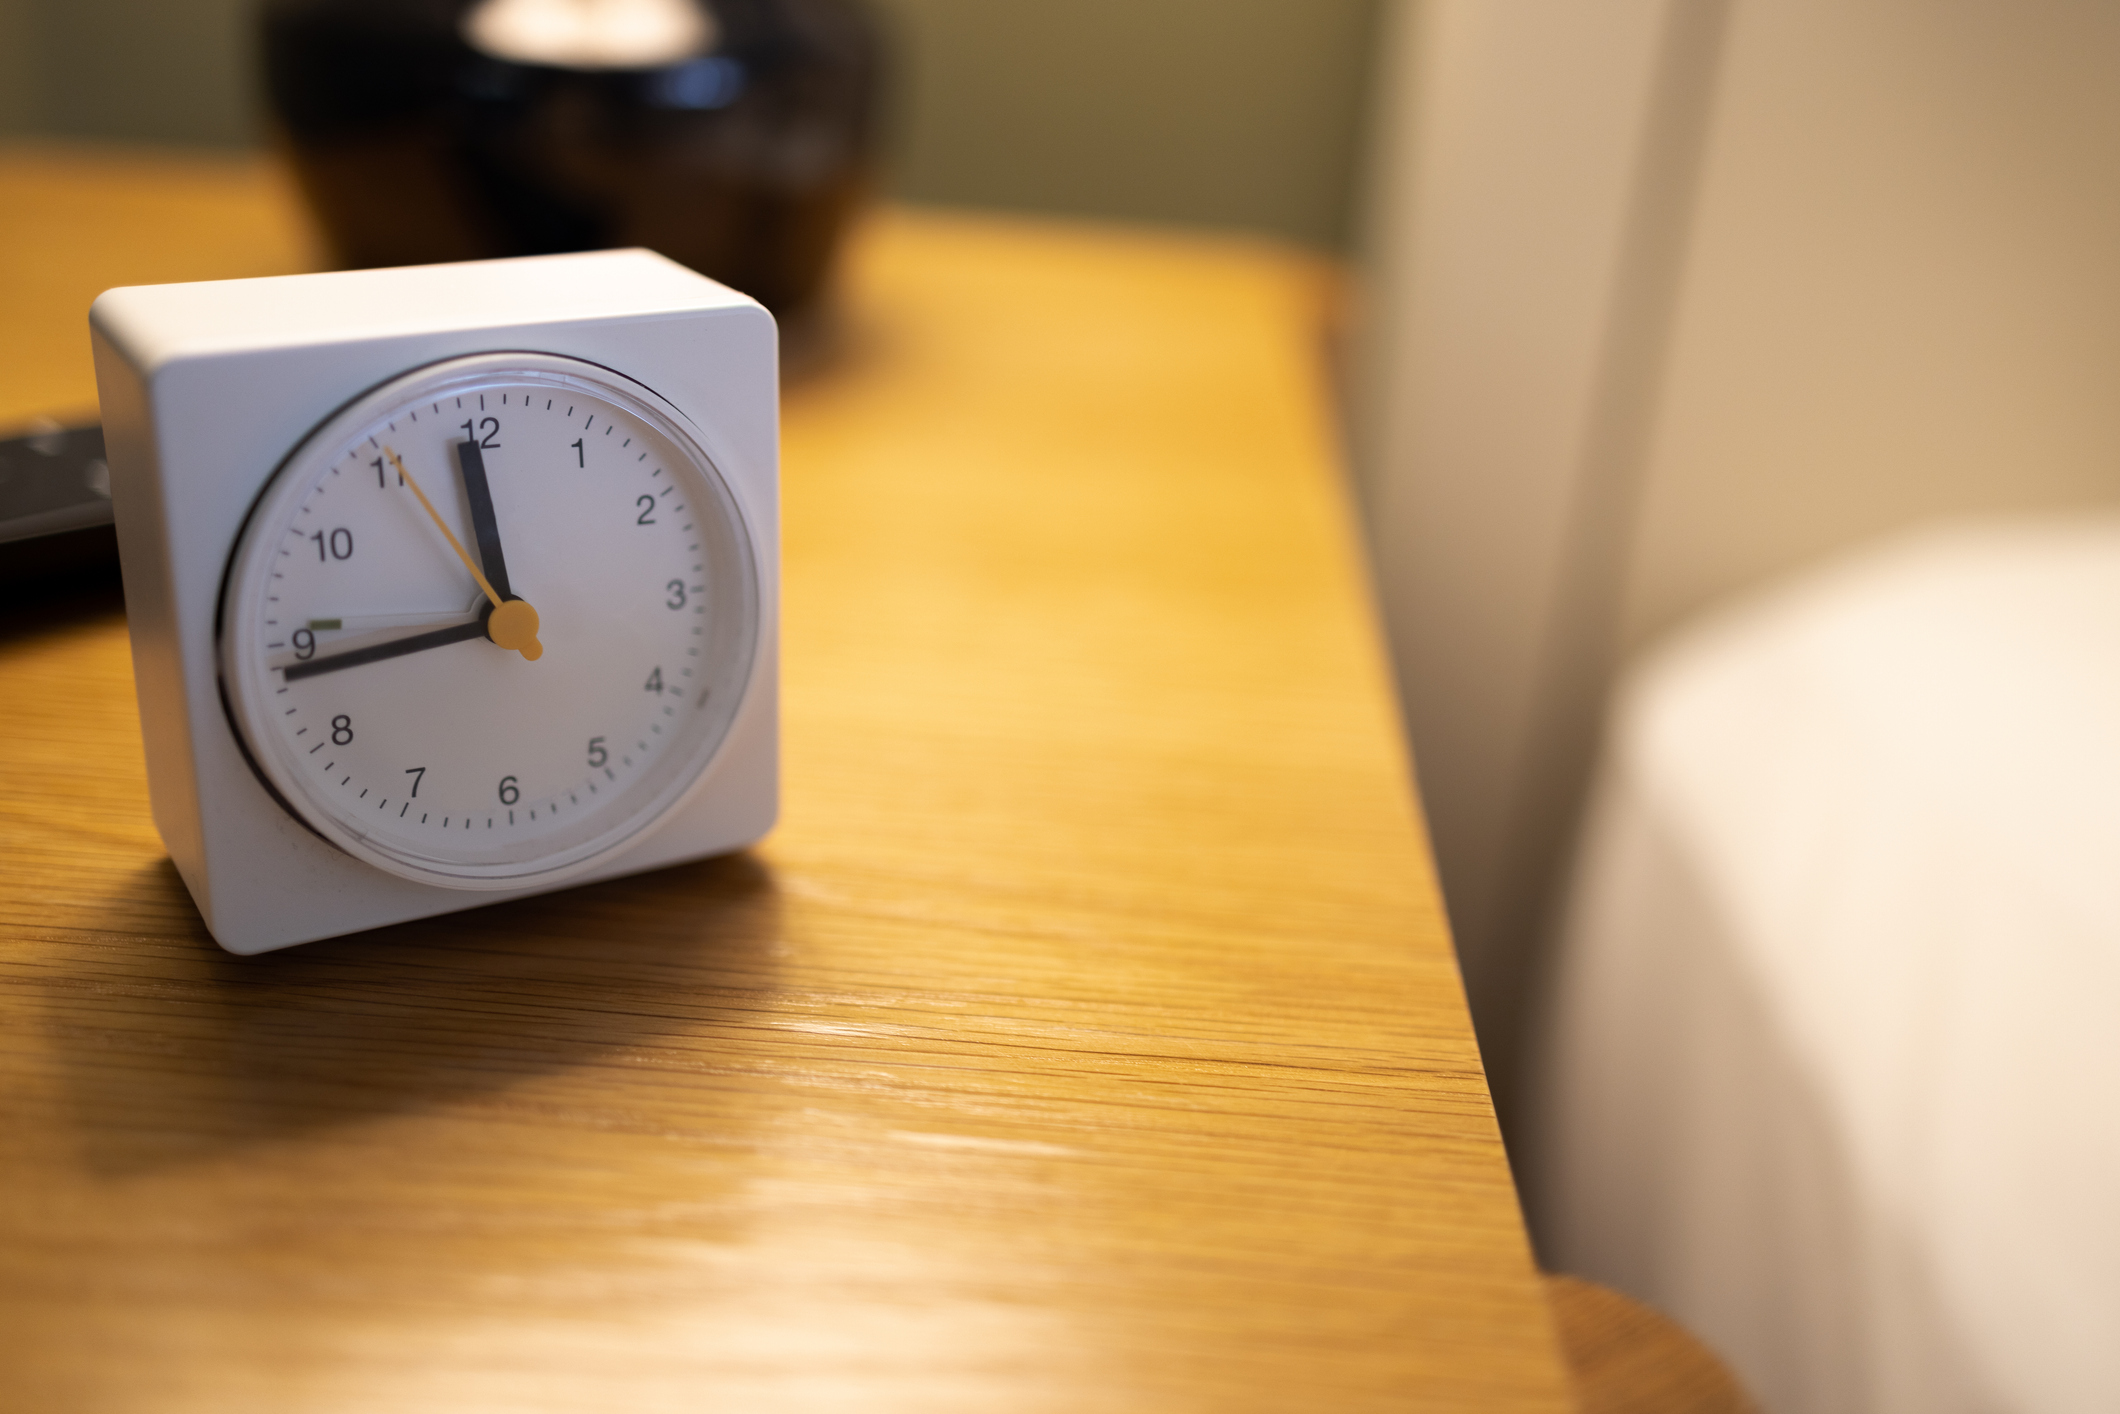 US senators reintroduce bill to make daylight saving time permanent